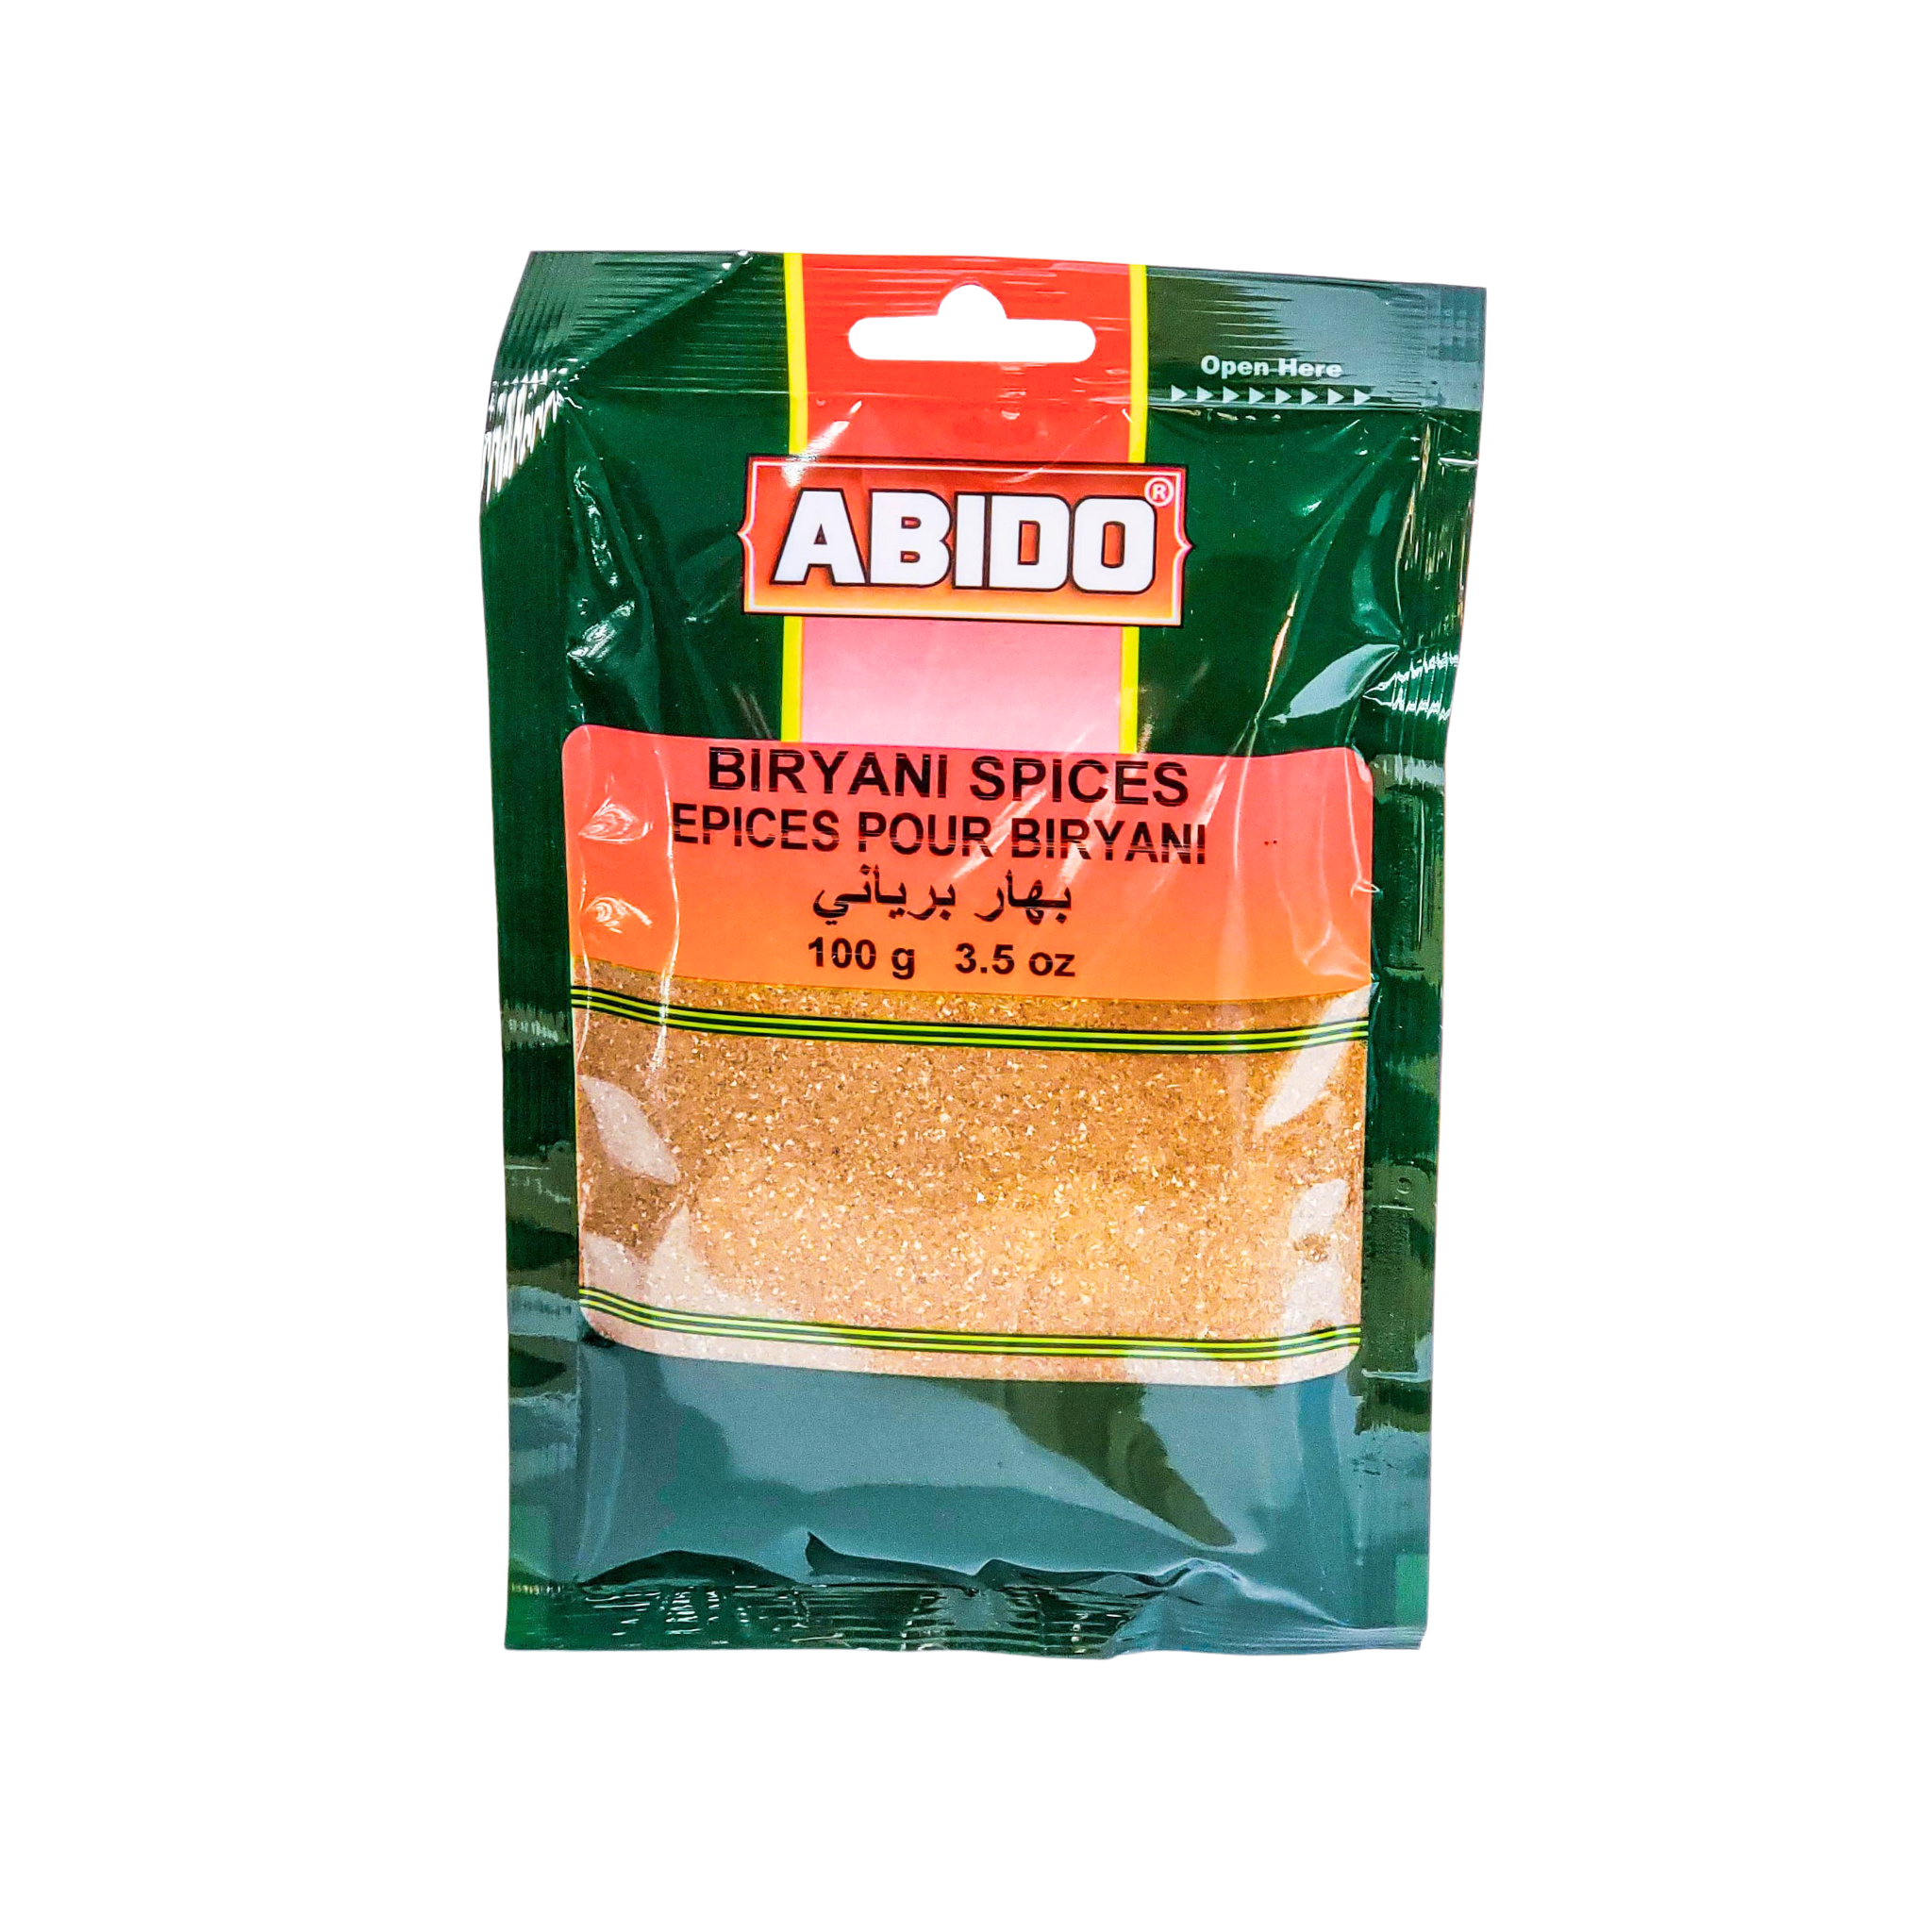 Abido( Biryani Spices/ Espices Pour Biryani) 100g